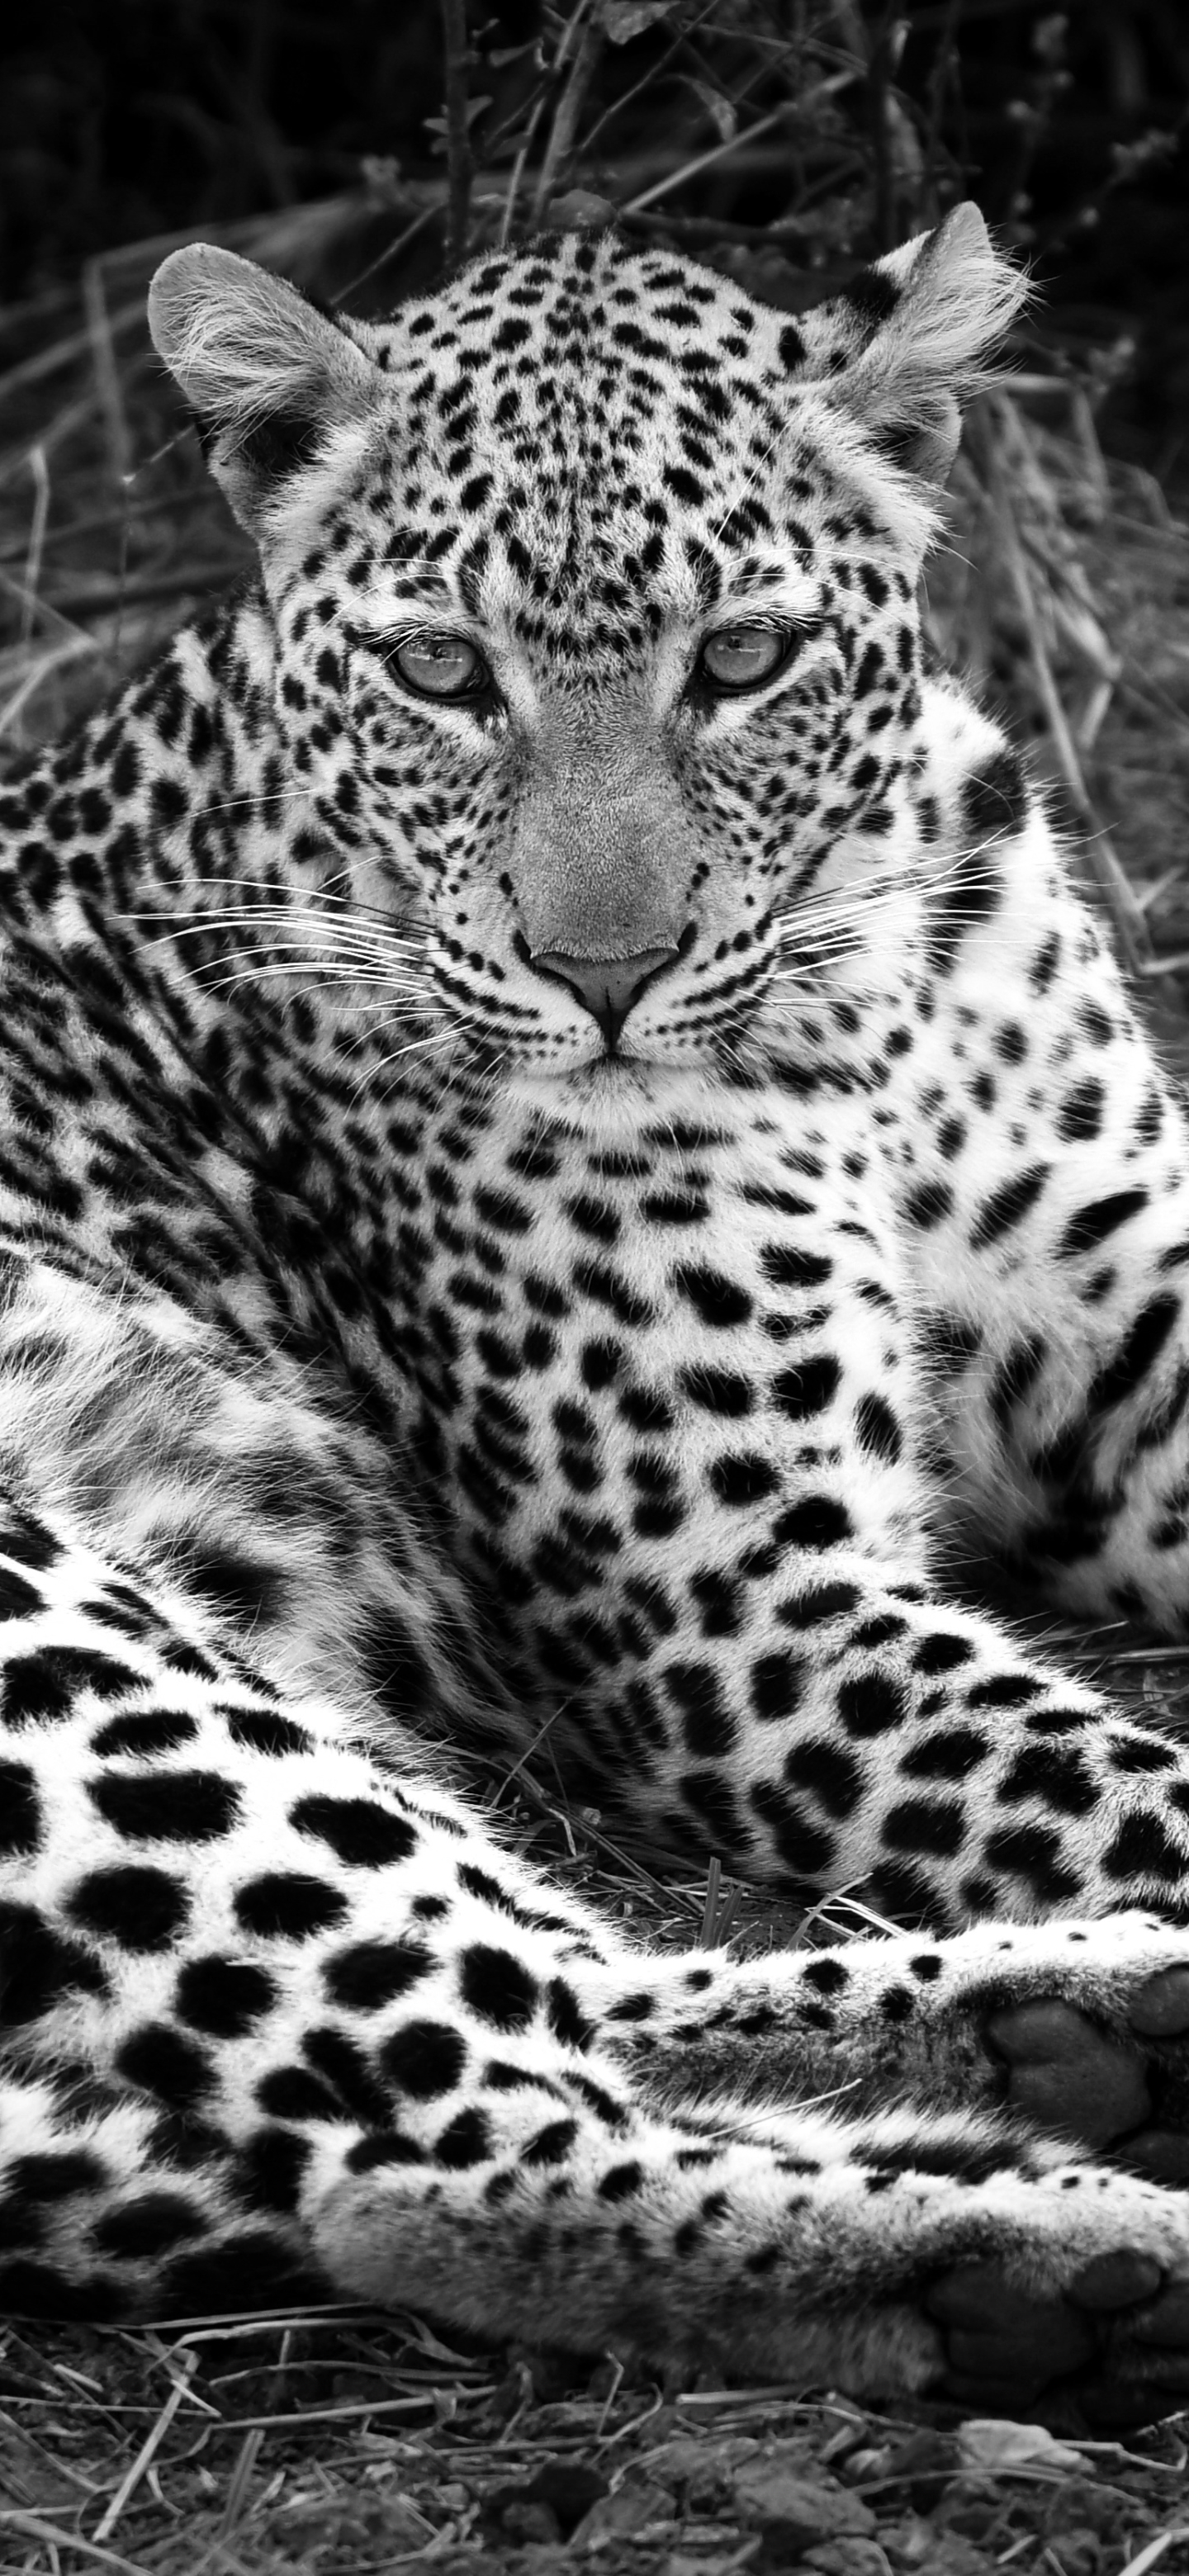 Young female leopard, Zambia